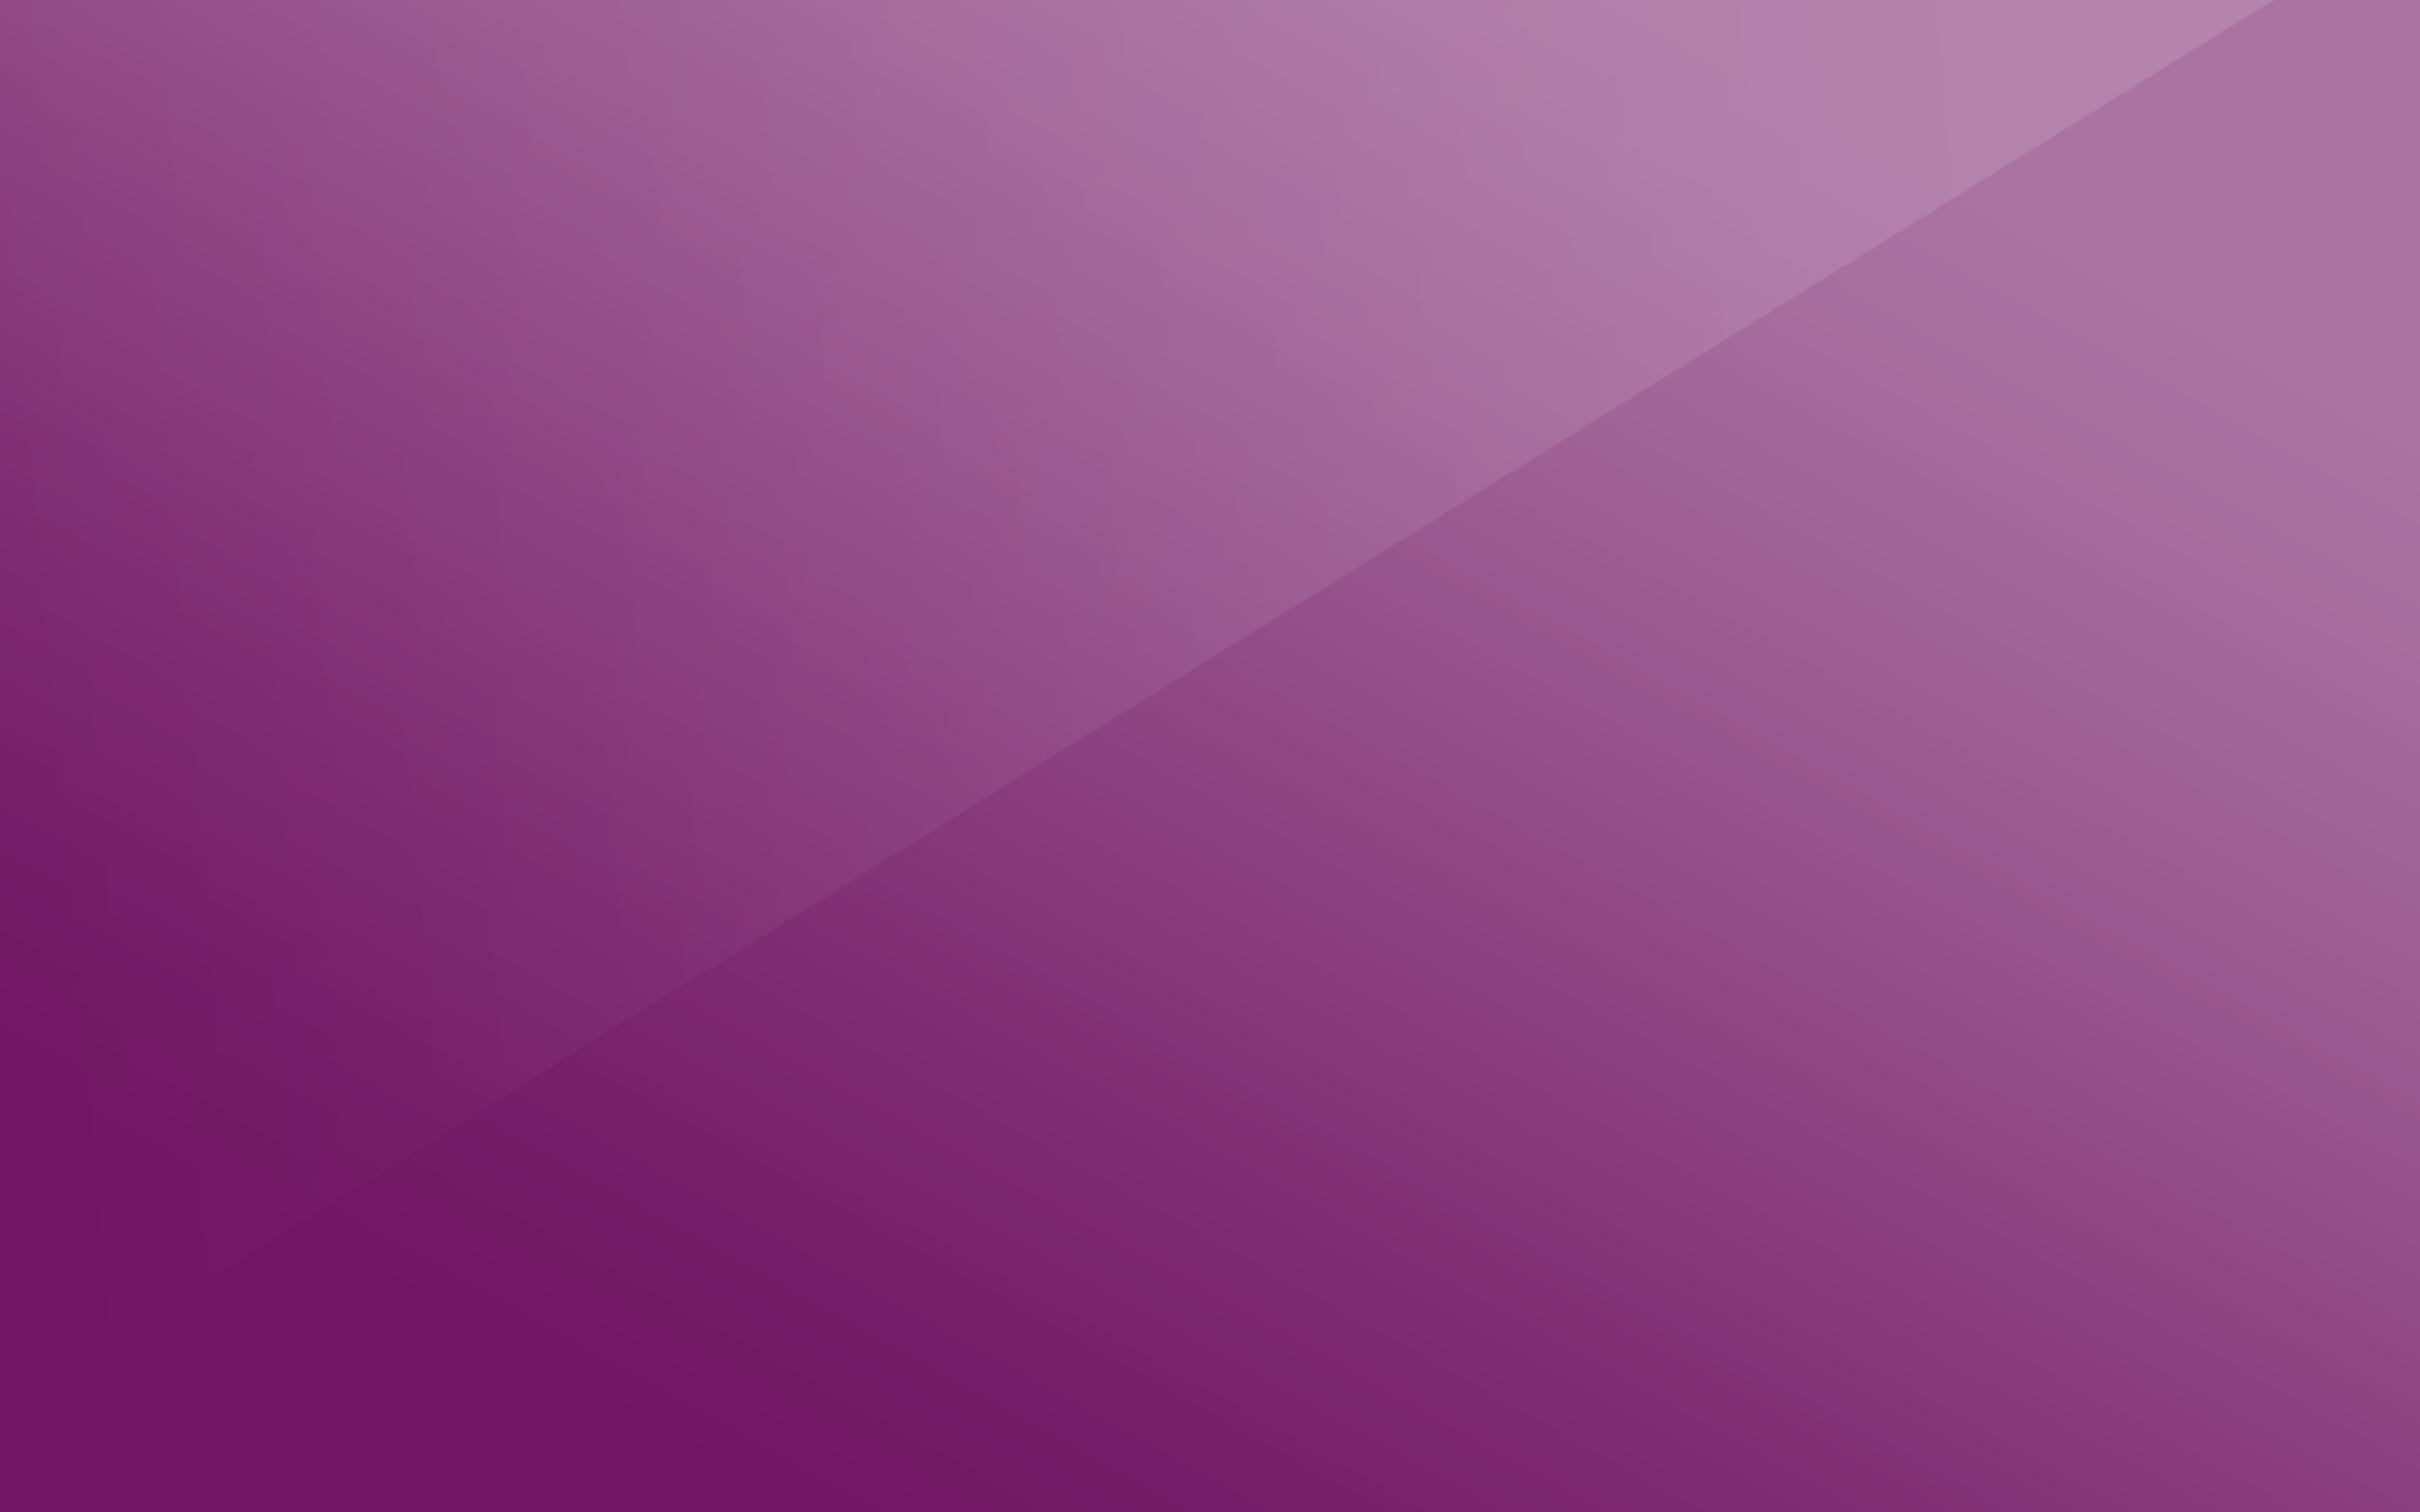  Light Purple Backgrounds wallpaper wallpaper hd background desktop